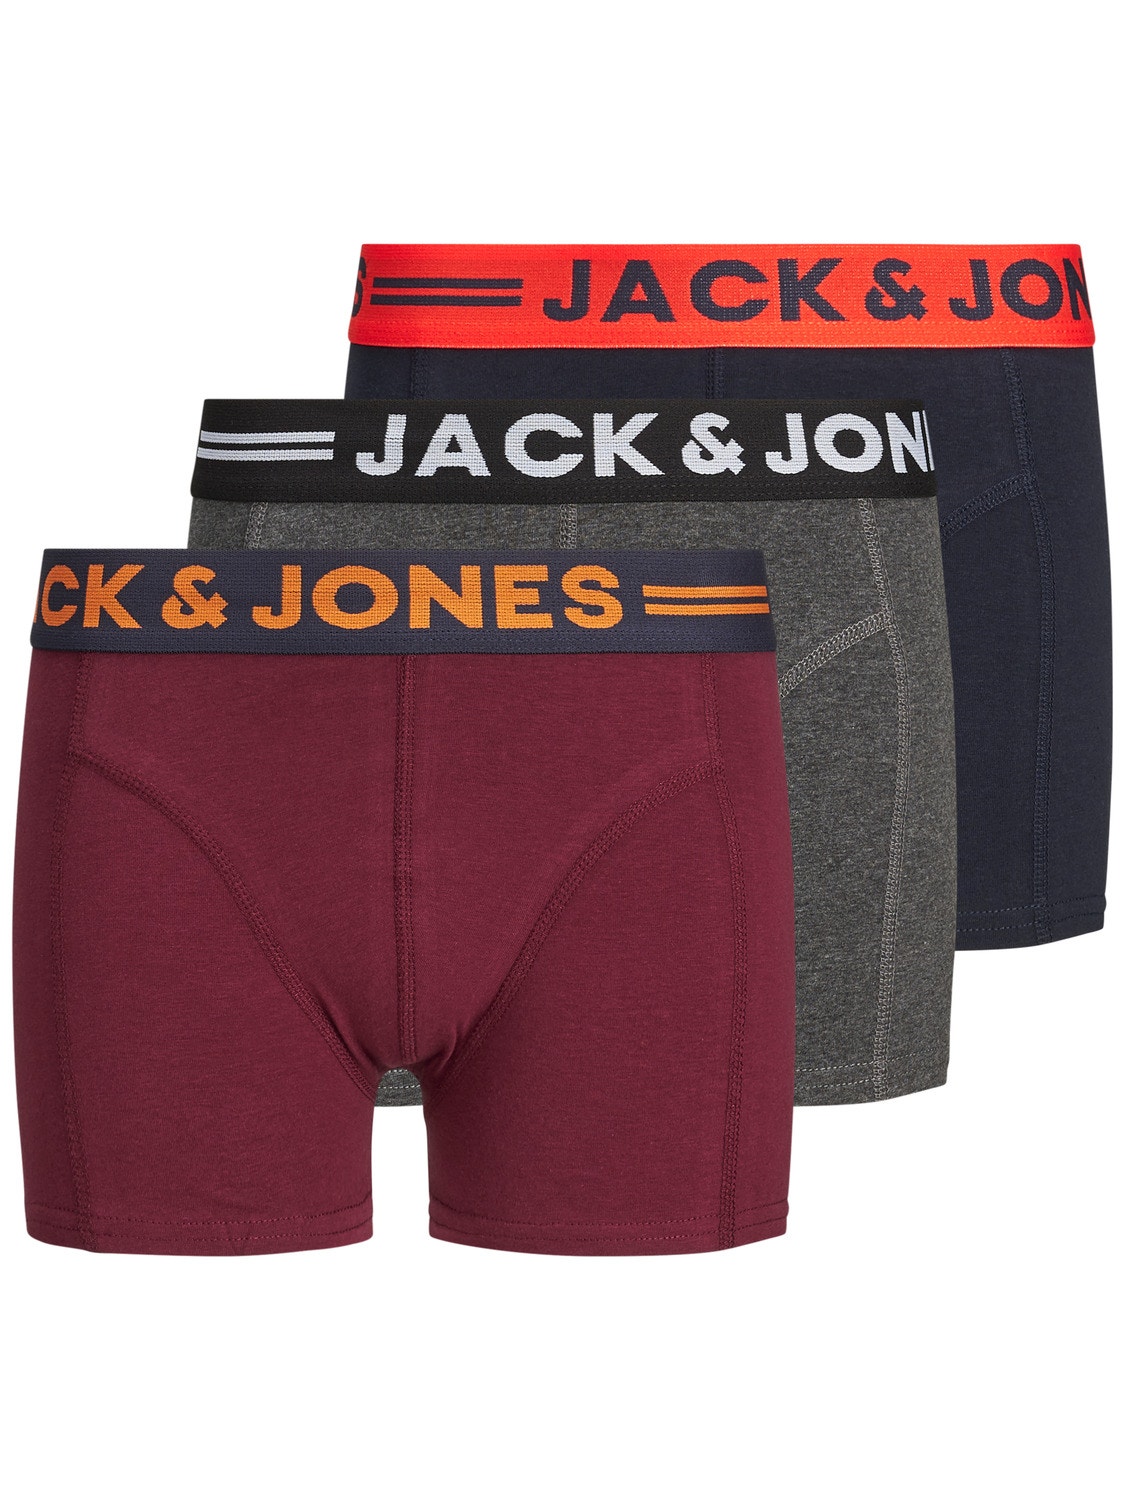 Jack & Jones 3-συσκευασία Κοντό παντελόνι Για αγόρια -Dark Grey Melange - 12149294